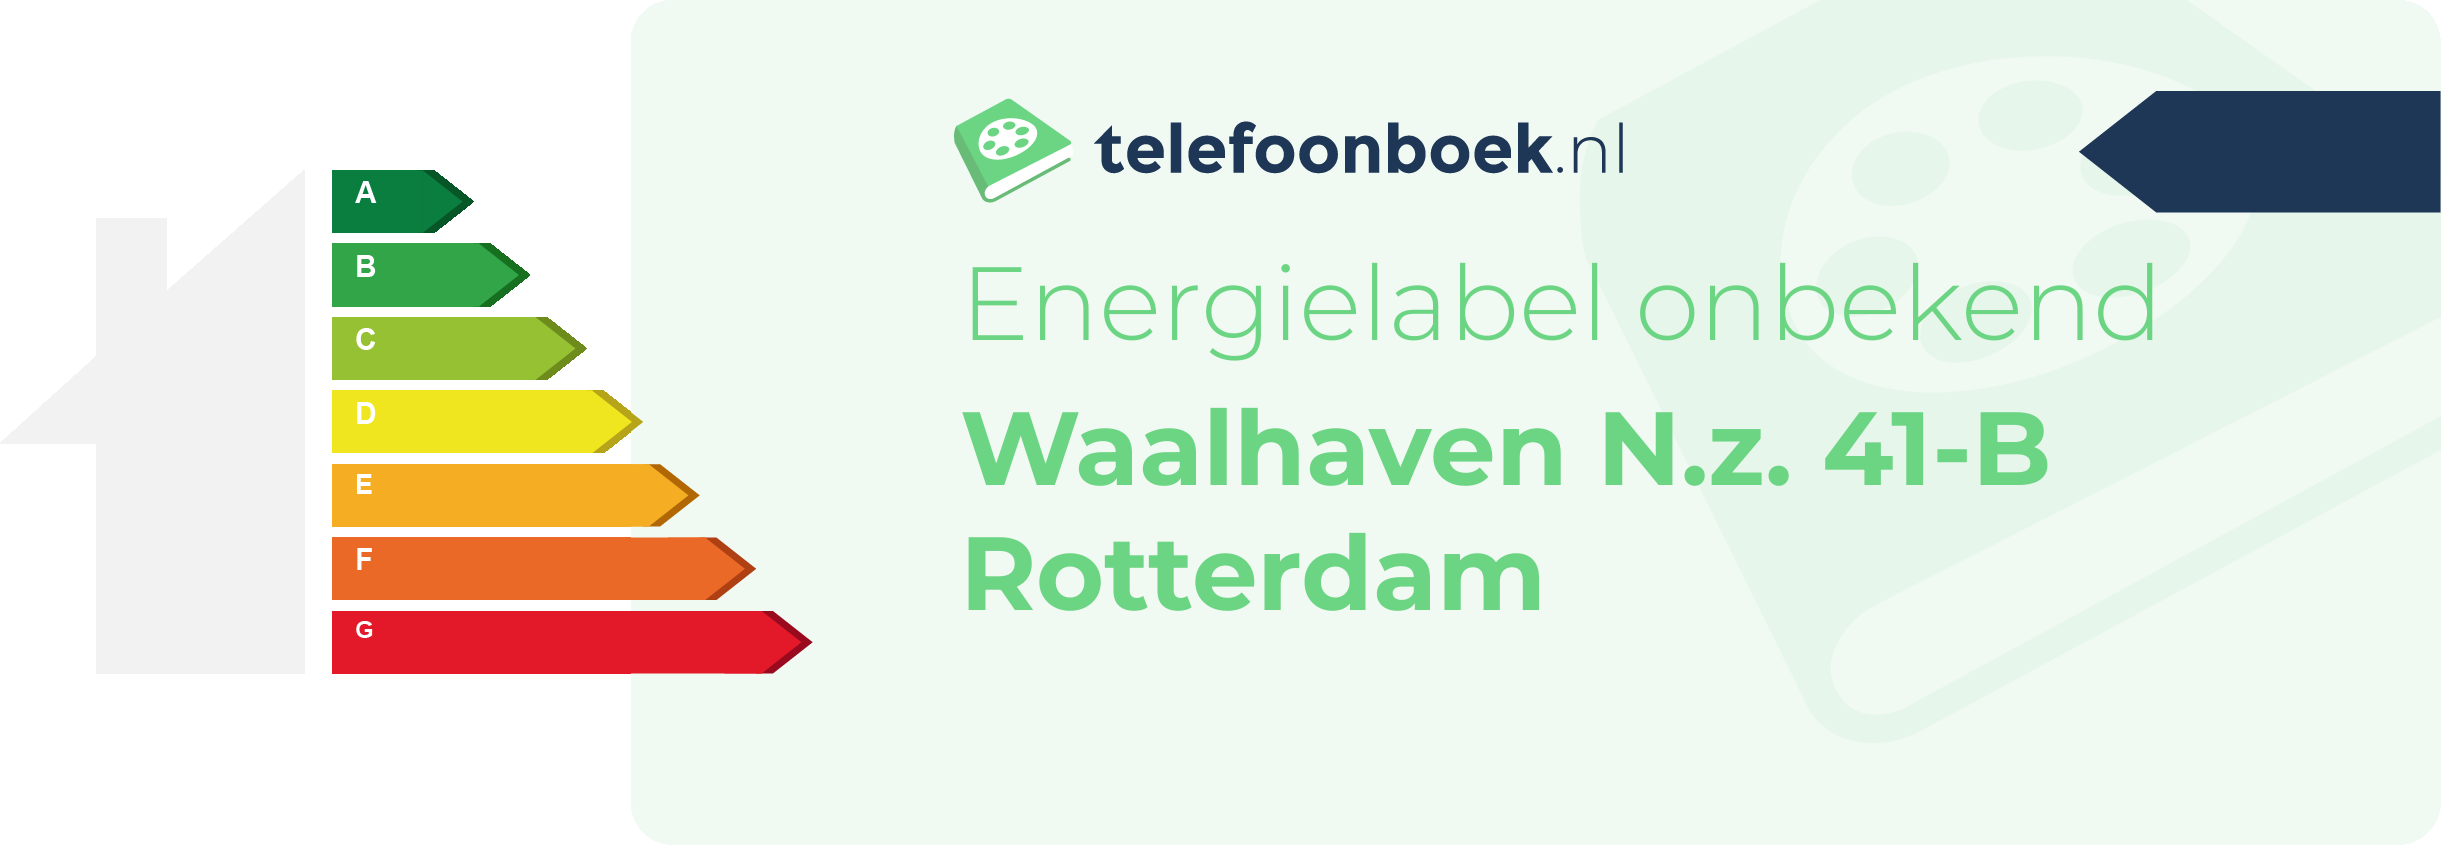 Energielabel Waalhaven N.z. 41-B Rotterdam